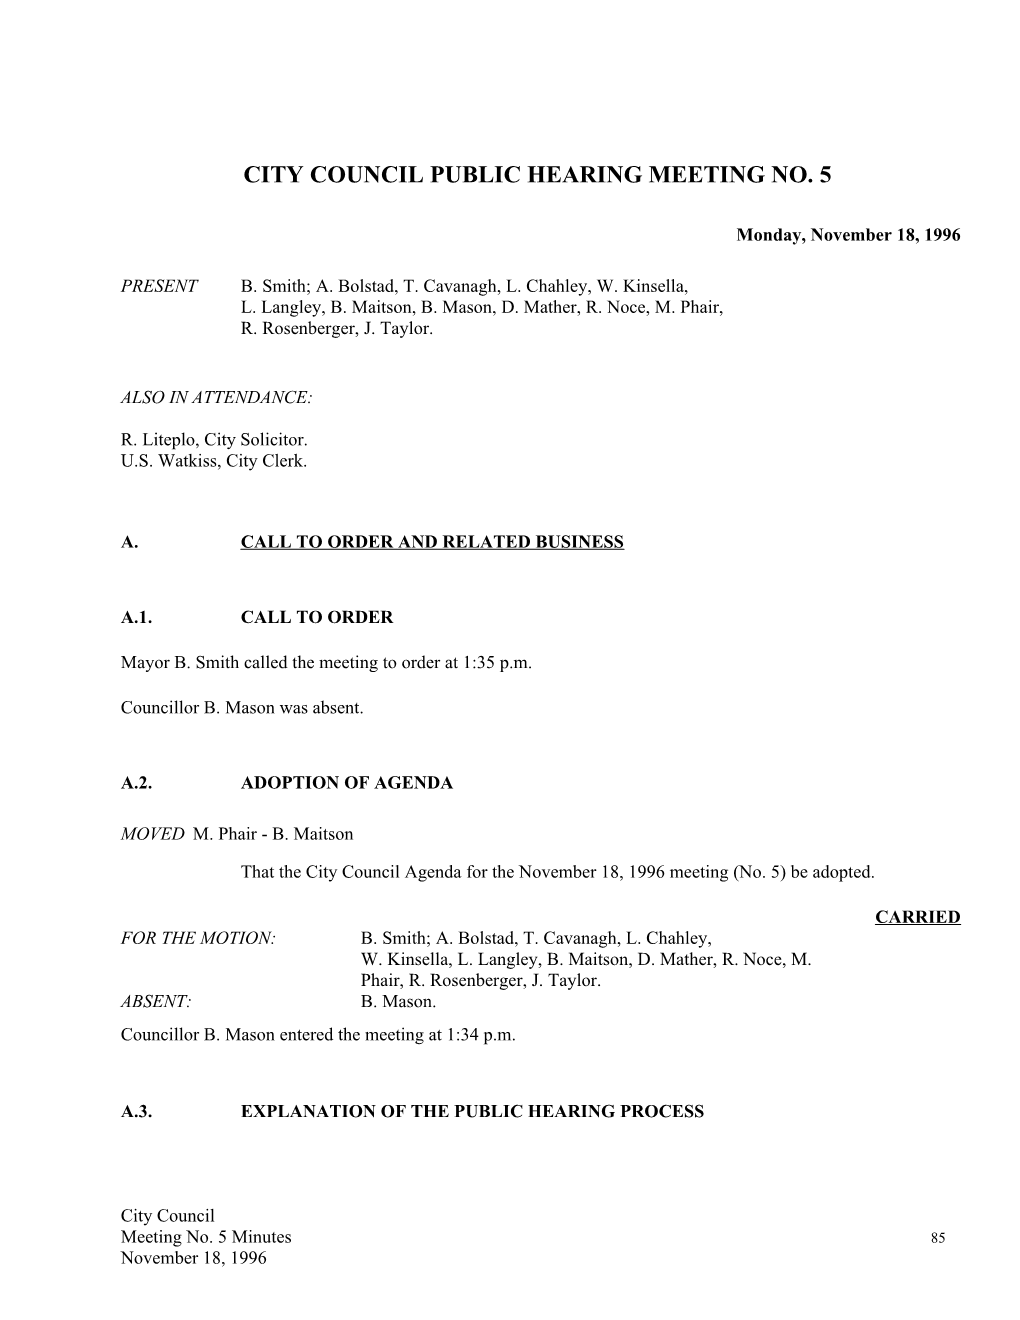 City Council Public Hearing Meeting No. 5